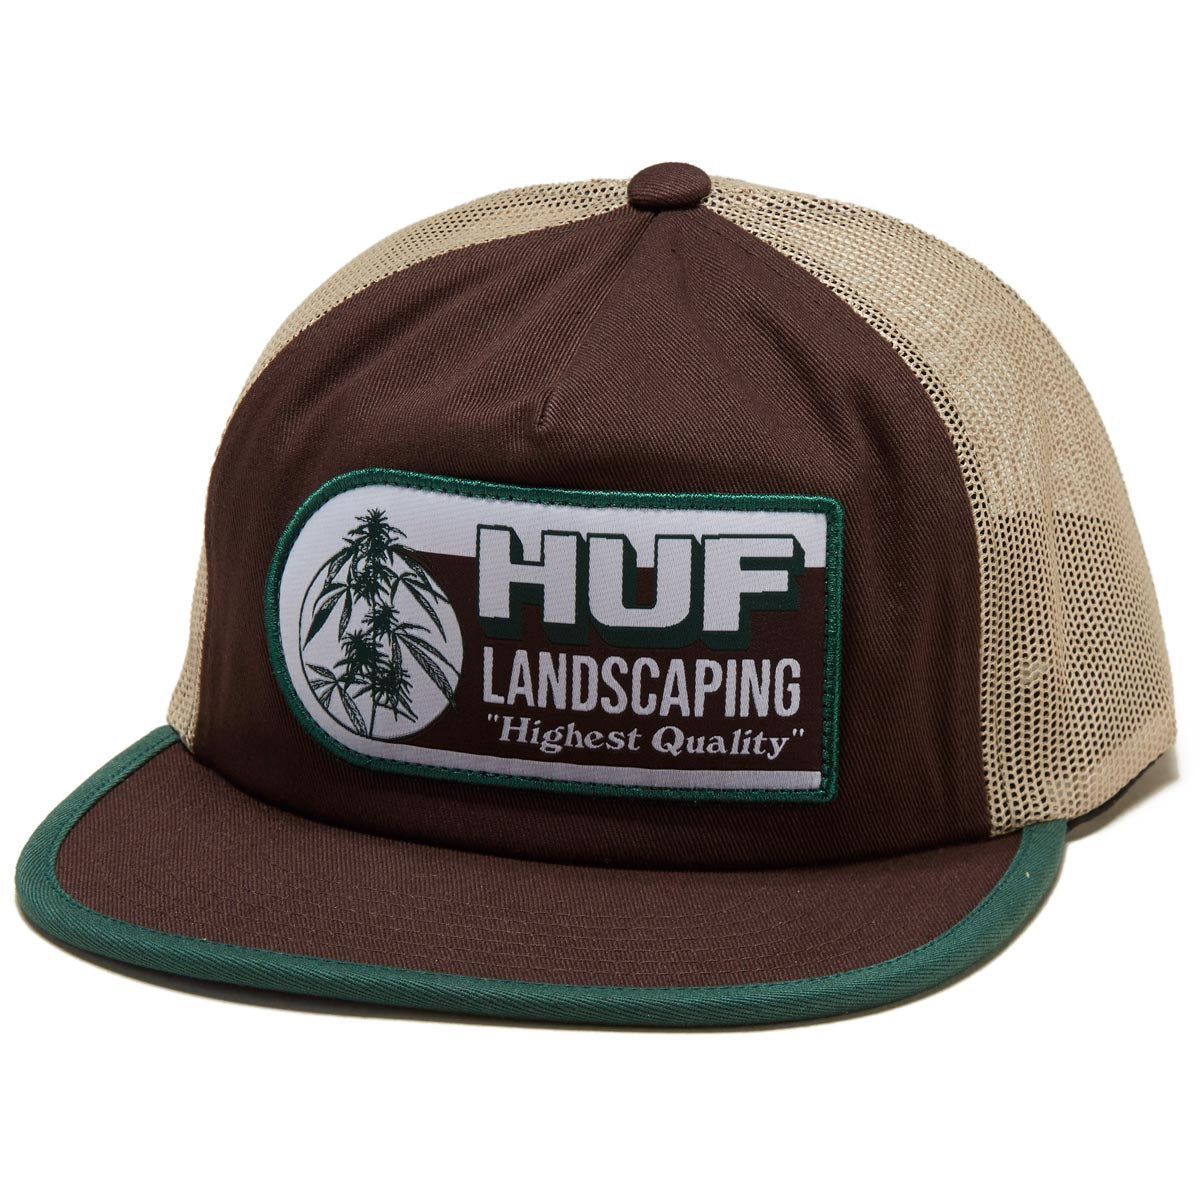 Huf Landscaping Bison Trucker Hat